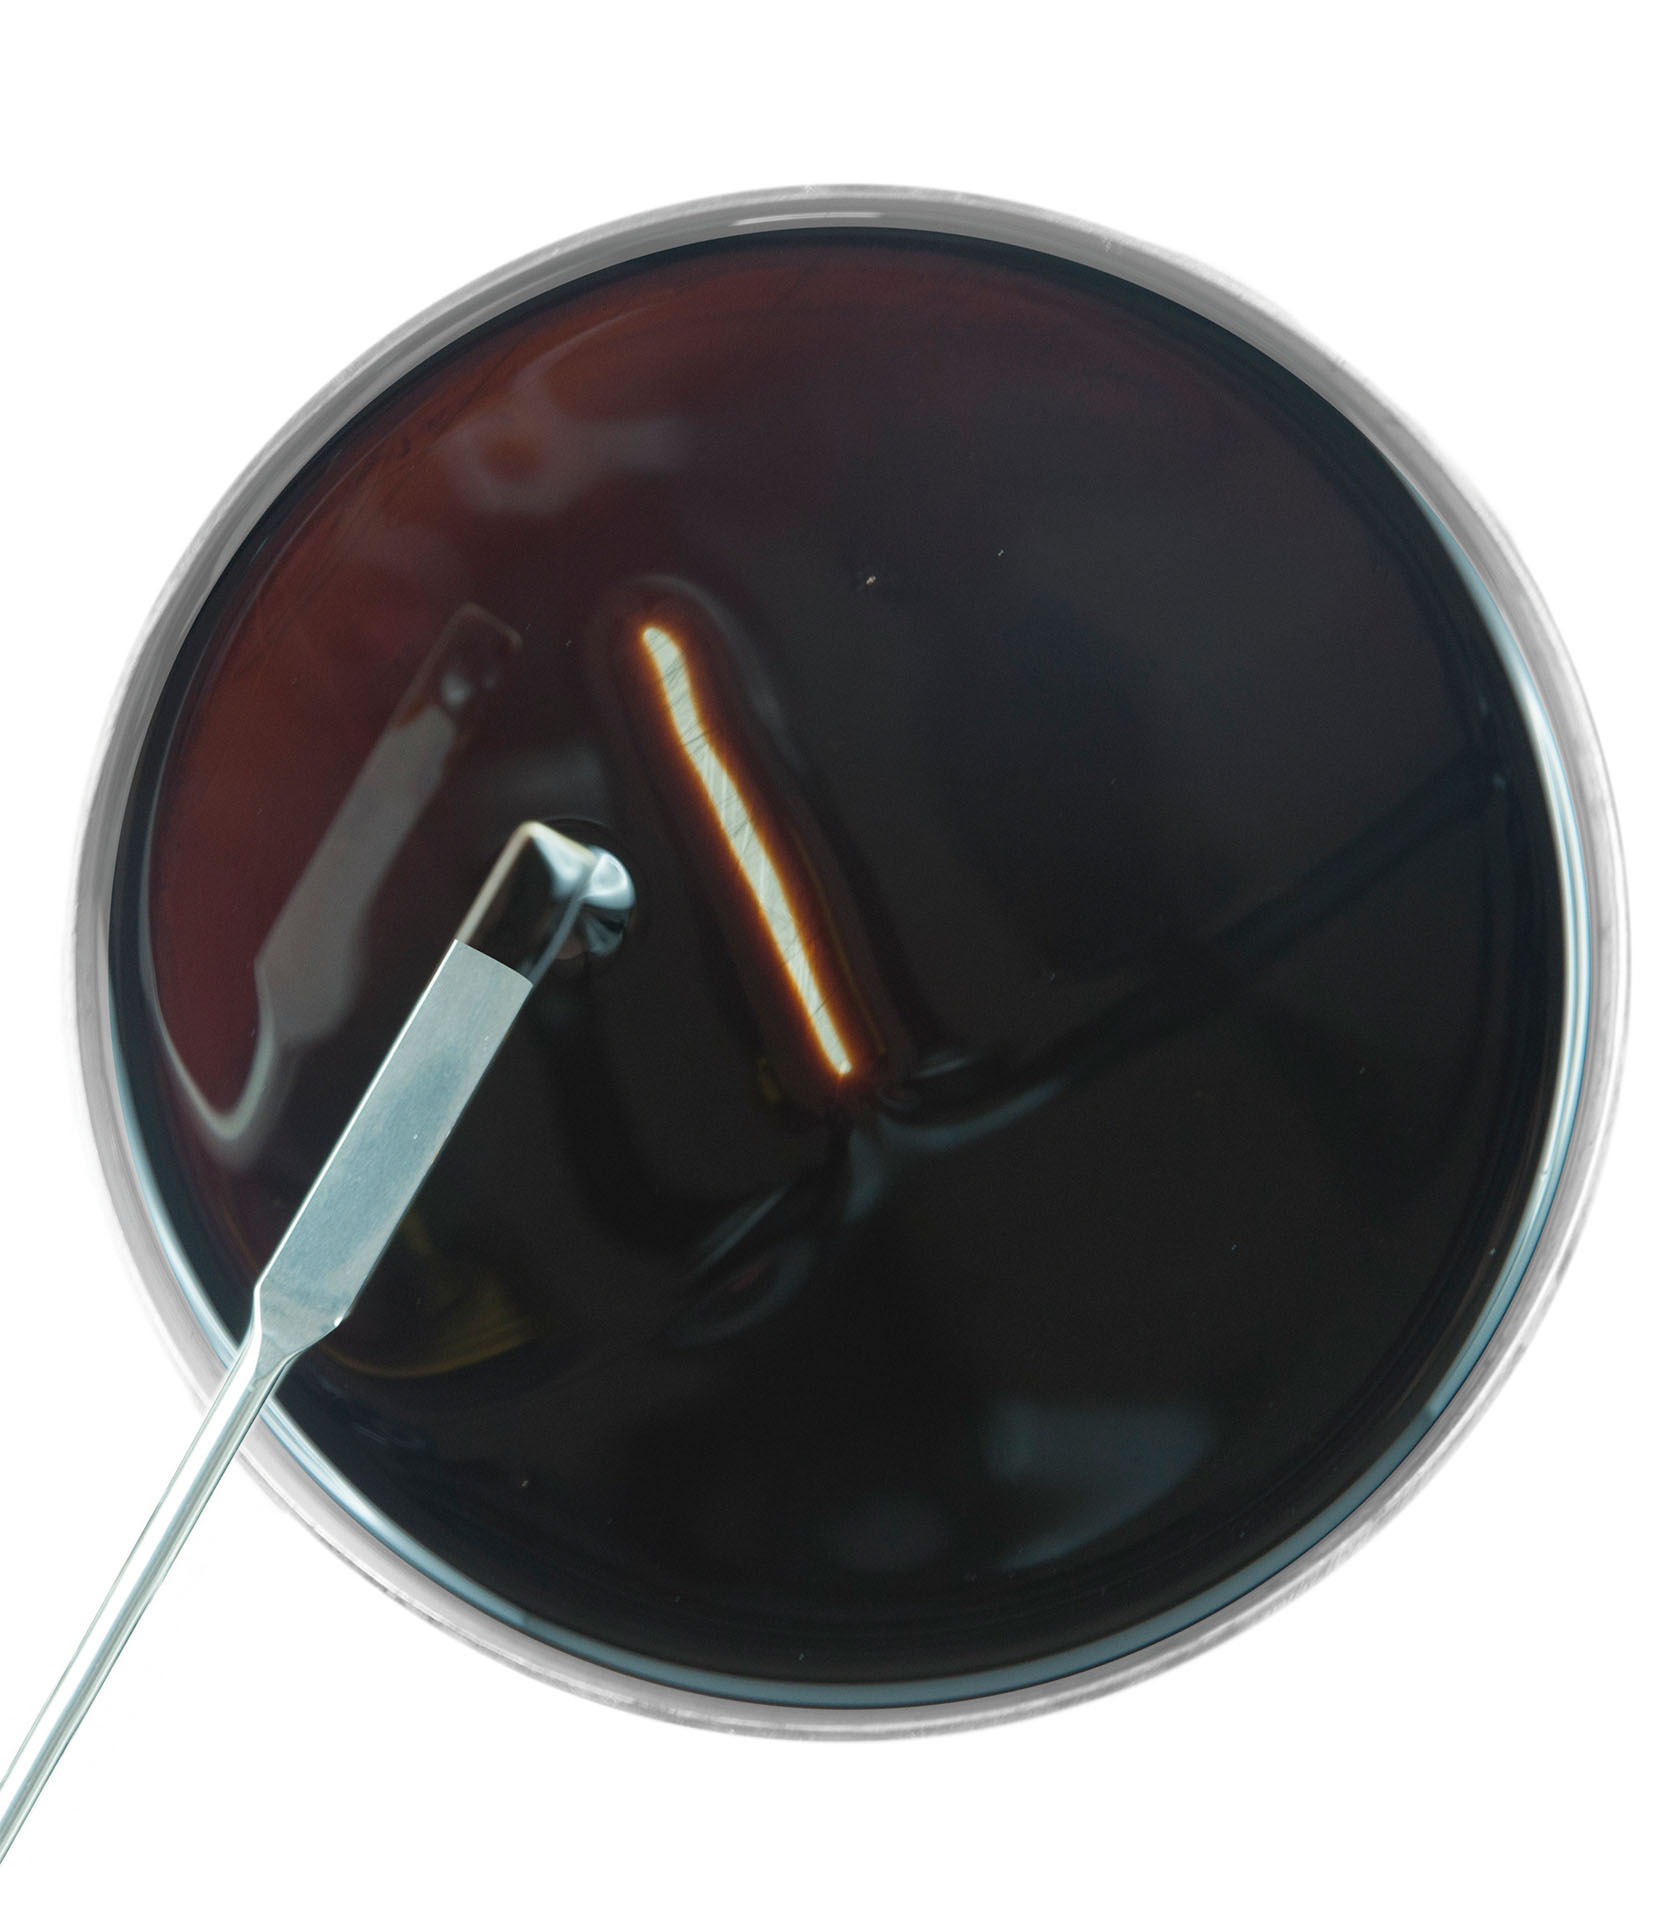 Liquid lubricating oil in a Petri dish